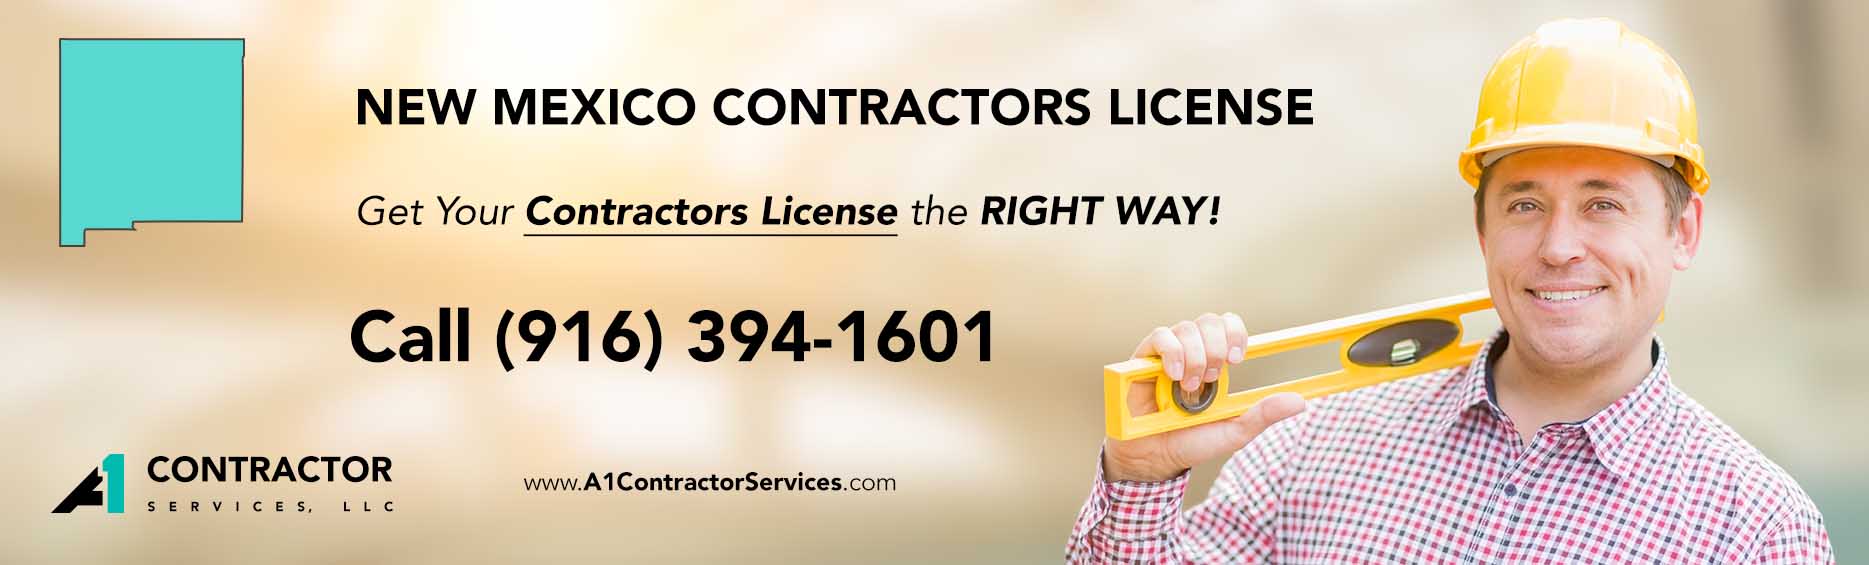 New Mexico Contractors License